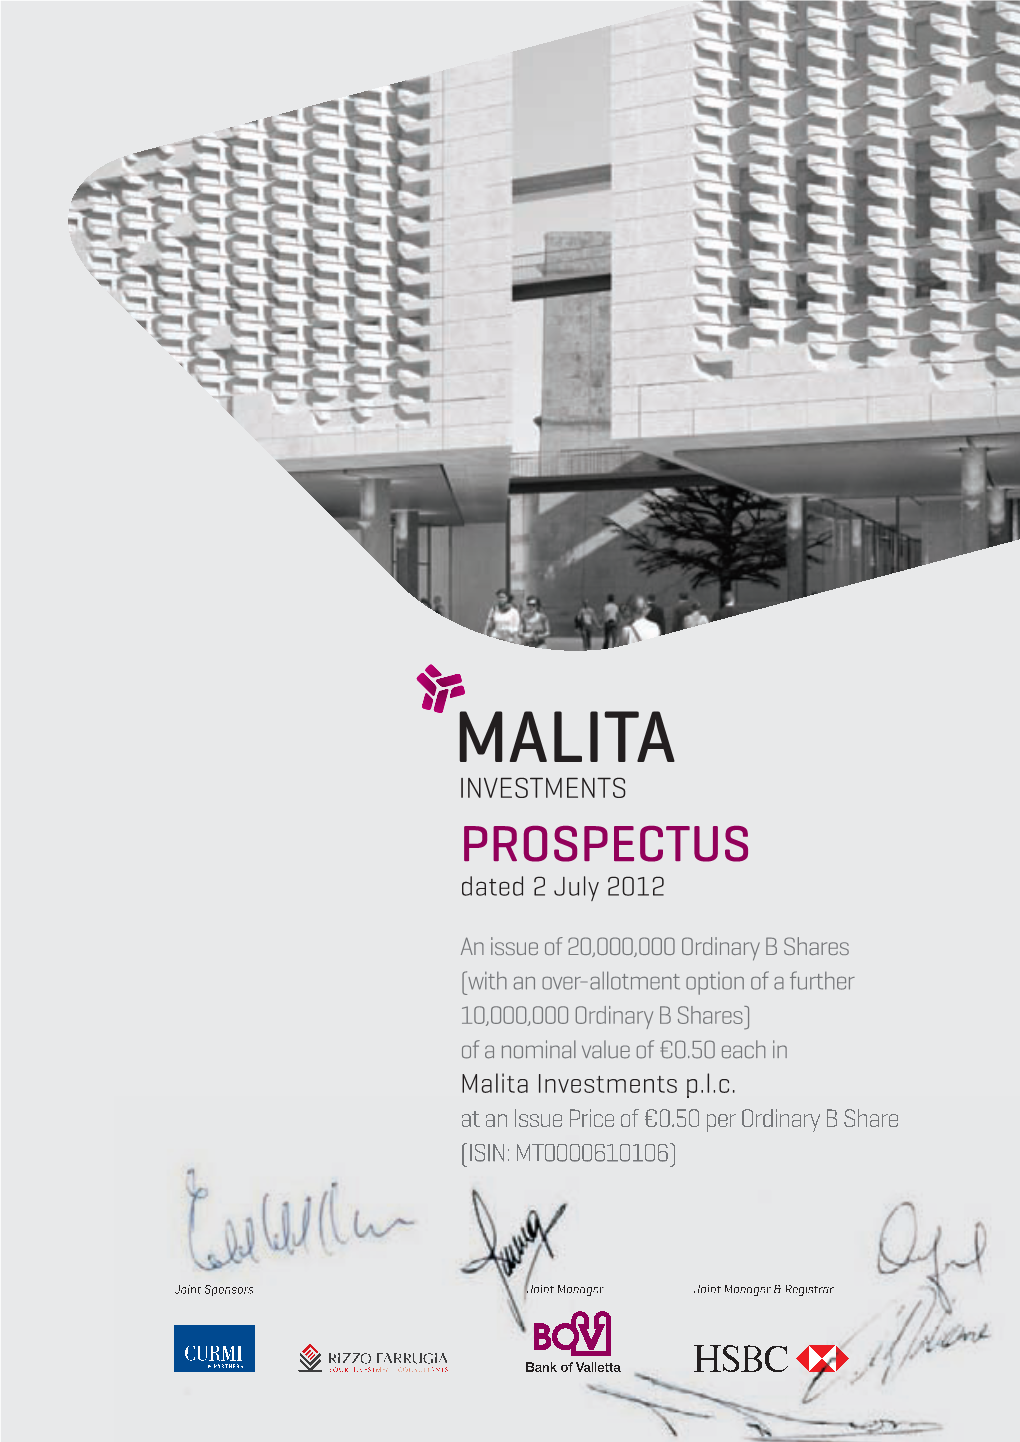 Malita-Investments-Plc-Prospectus-02 07 2012.Pdf